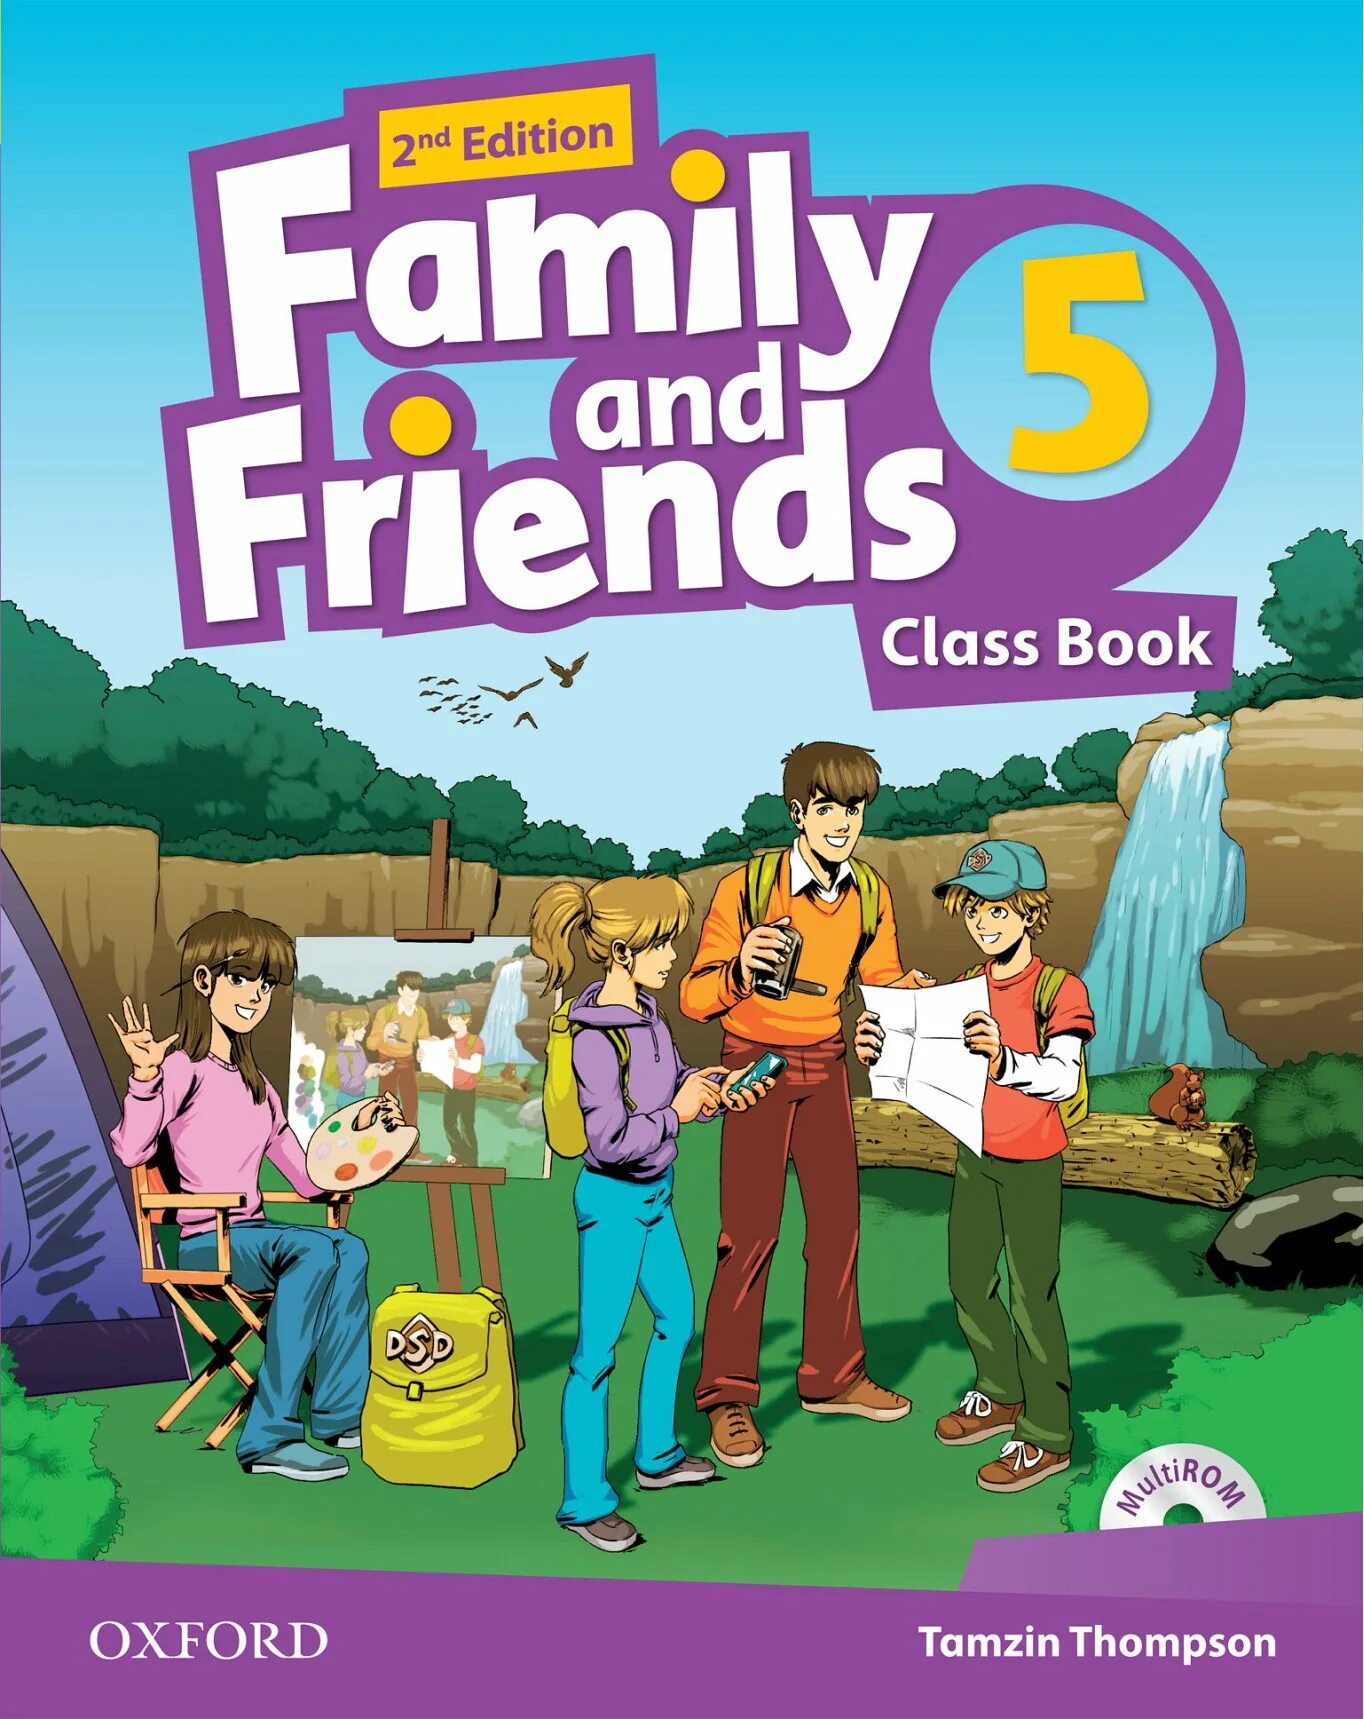 Student book 7 класс учебник. Учебник Family and friends 5. Фэмили френдс 6. \Фэмили энд френдс 2 издание. Family and friends 3 2nd Edition.